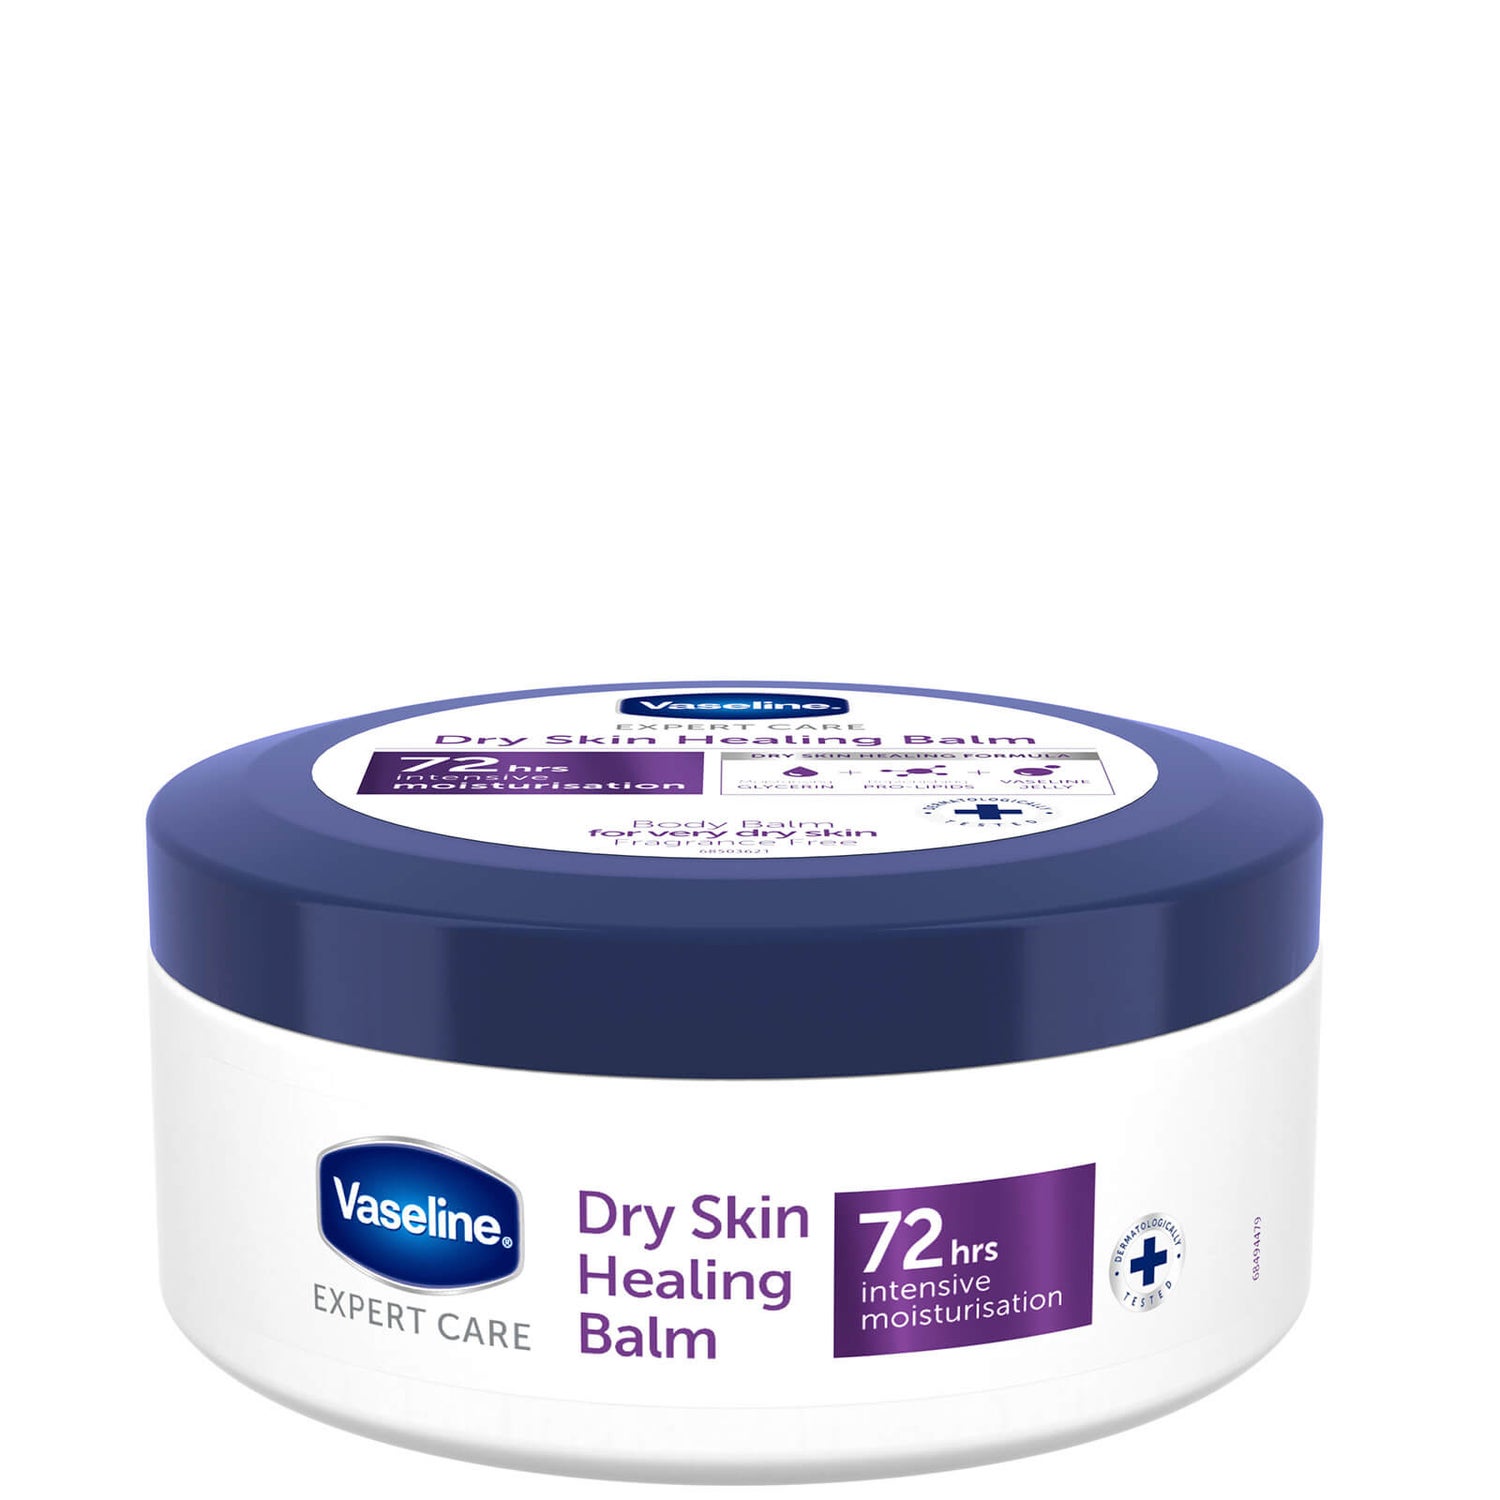 Vaseline Expert Care Dry Skin Healing Balm balsam regenerujący do skóry suchej